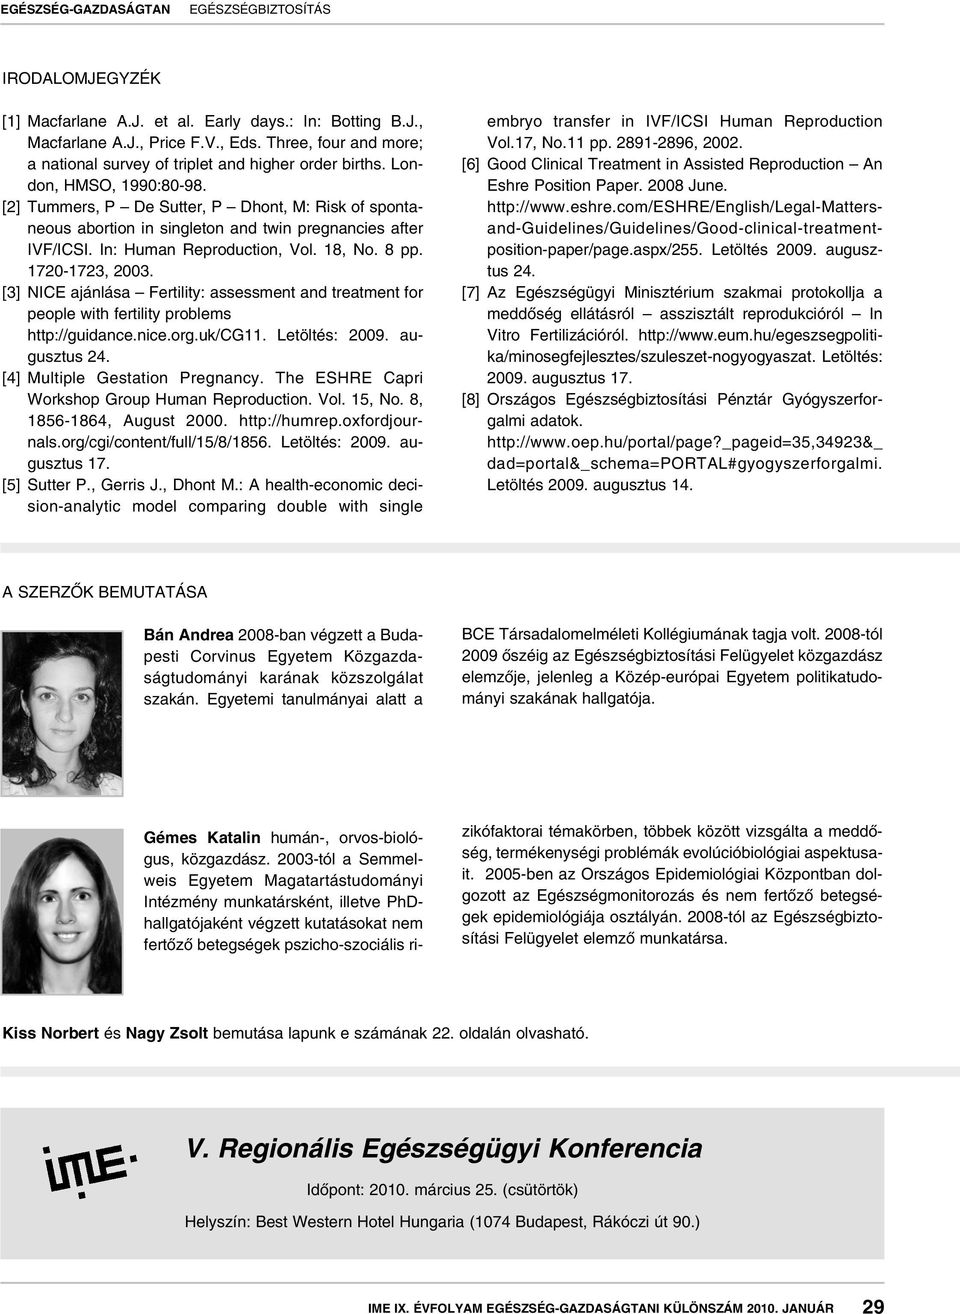 1720-1723, 2003. [3] NICE ajánlása Fertility: assessment and treatment for people with fertility problems http://guidance.nice.org.uk/cg11. Letöltés: 2009. augusztus 24.